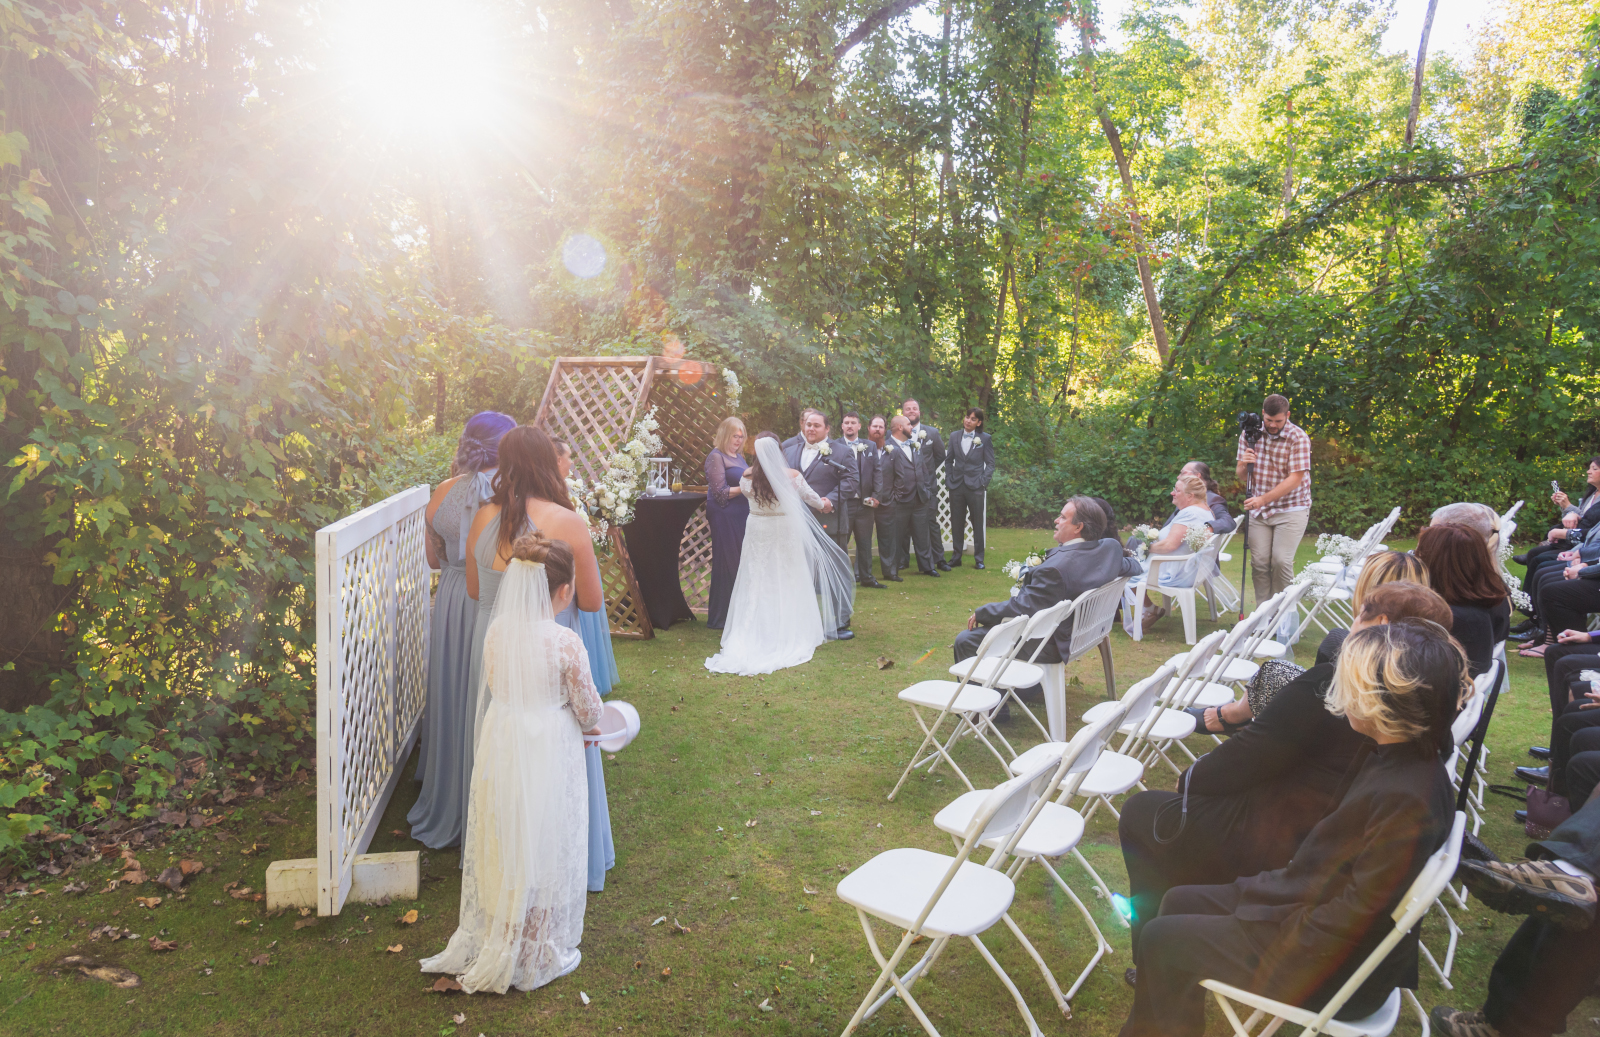 Bride and groom, wedding ceremony, sunlight, lens flare, outdoor September wedding ceremony at Westfall Event Center